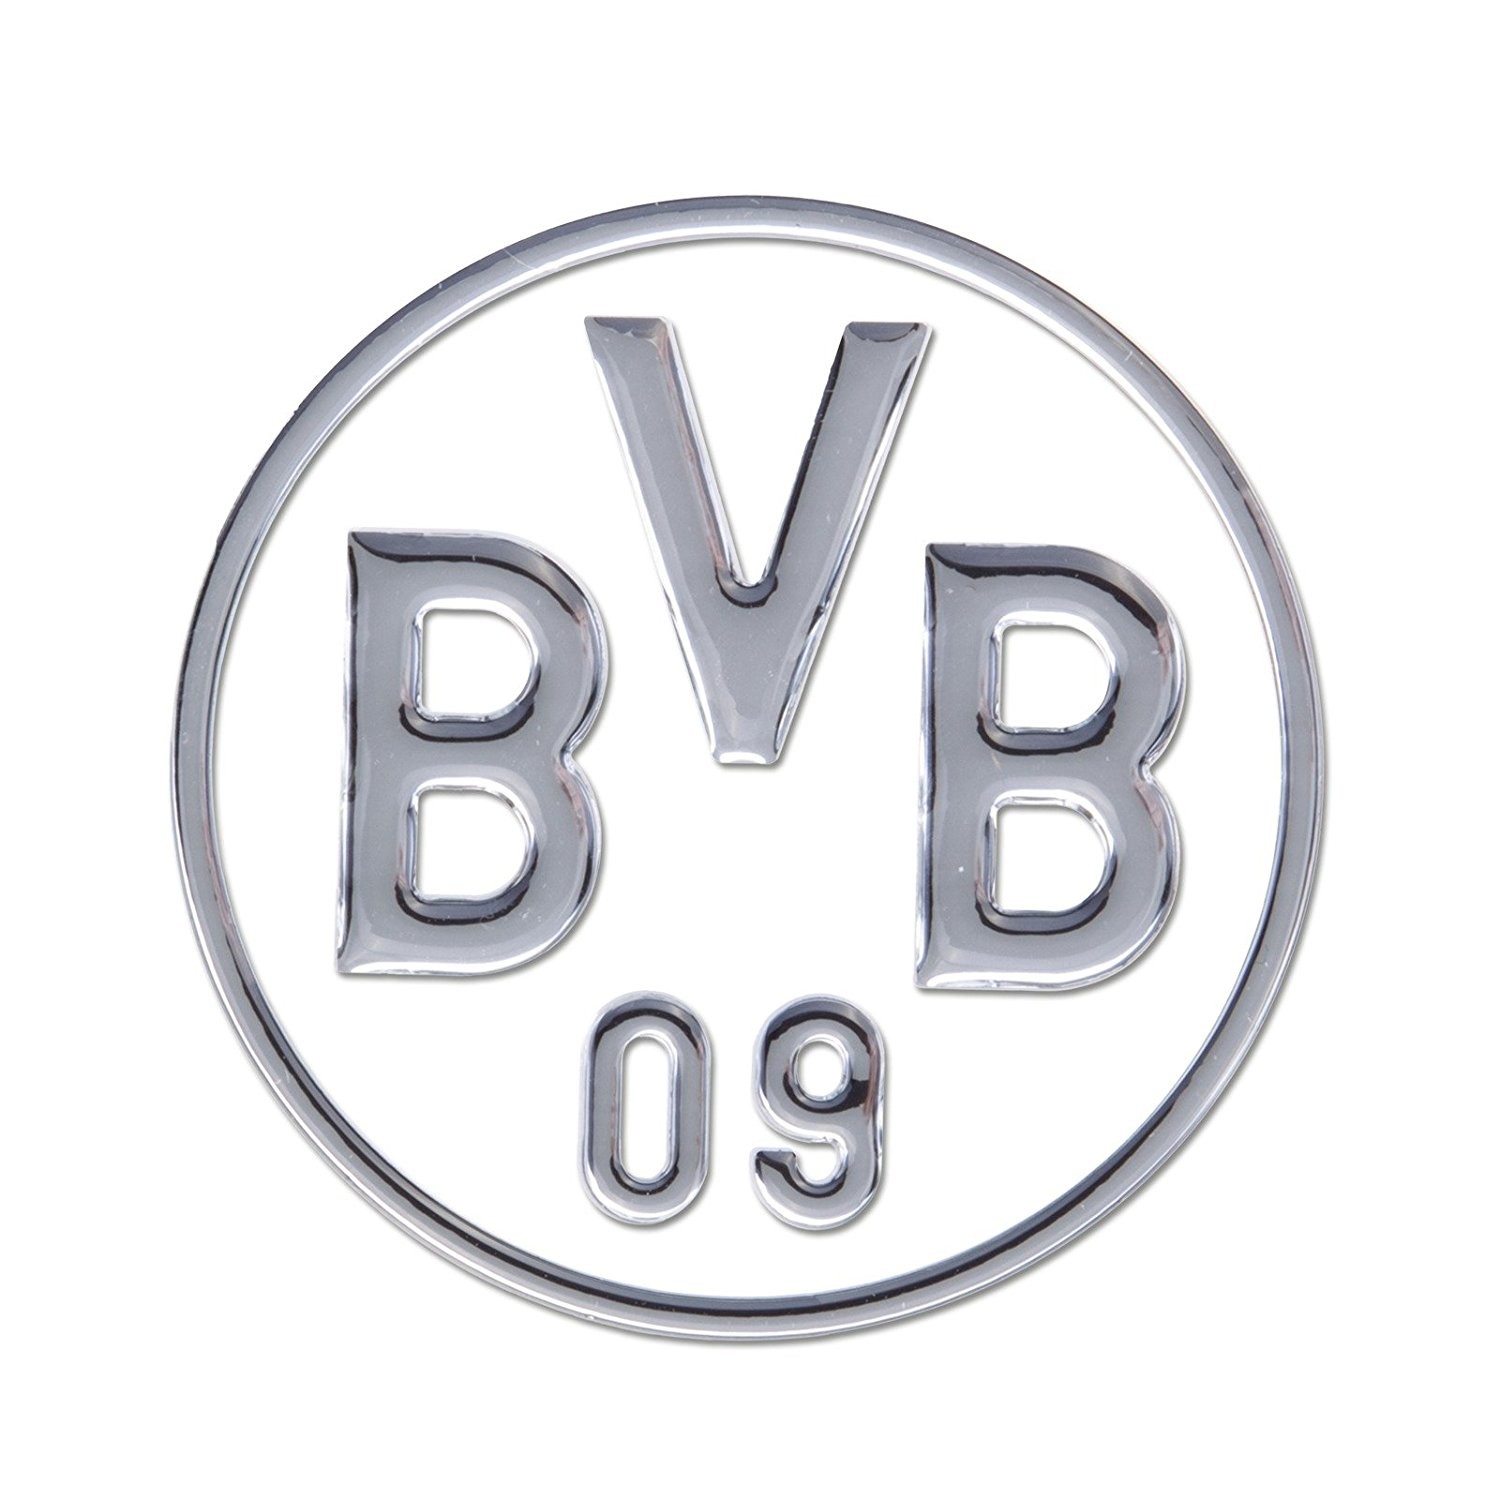 Borussia Dortmund Autoaufkleber/Aufkleber/Sticker Polaroid 3 in 1 BVB 09 -  Plus gratis Aufkleber Forever Dortmund